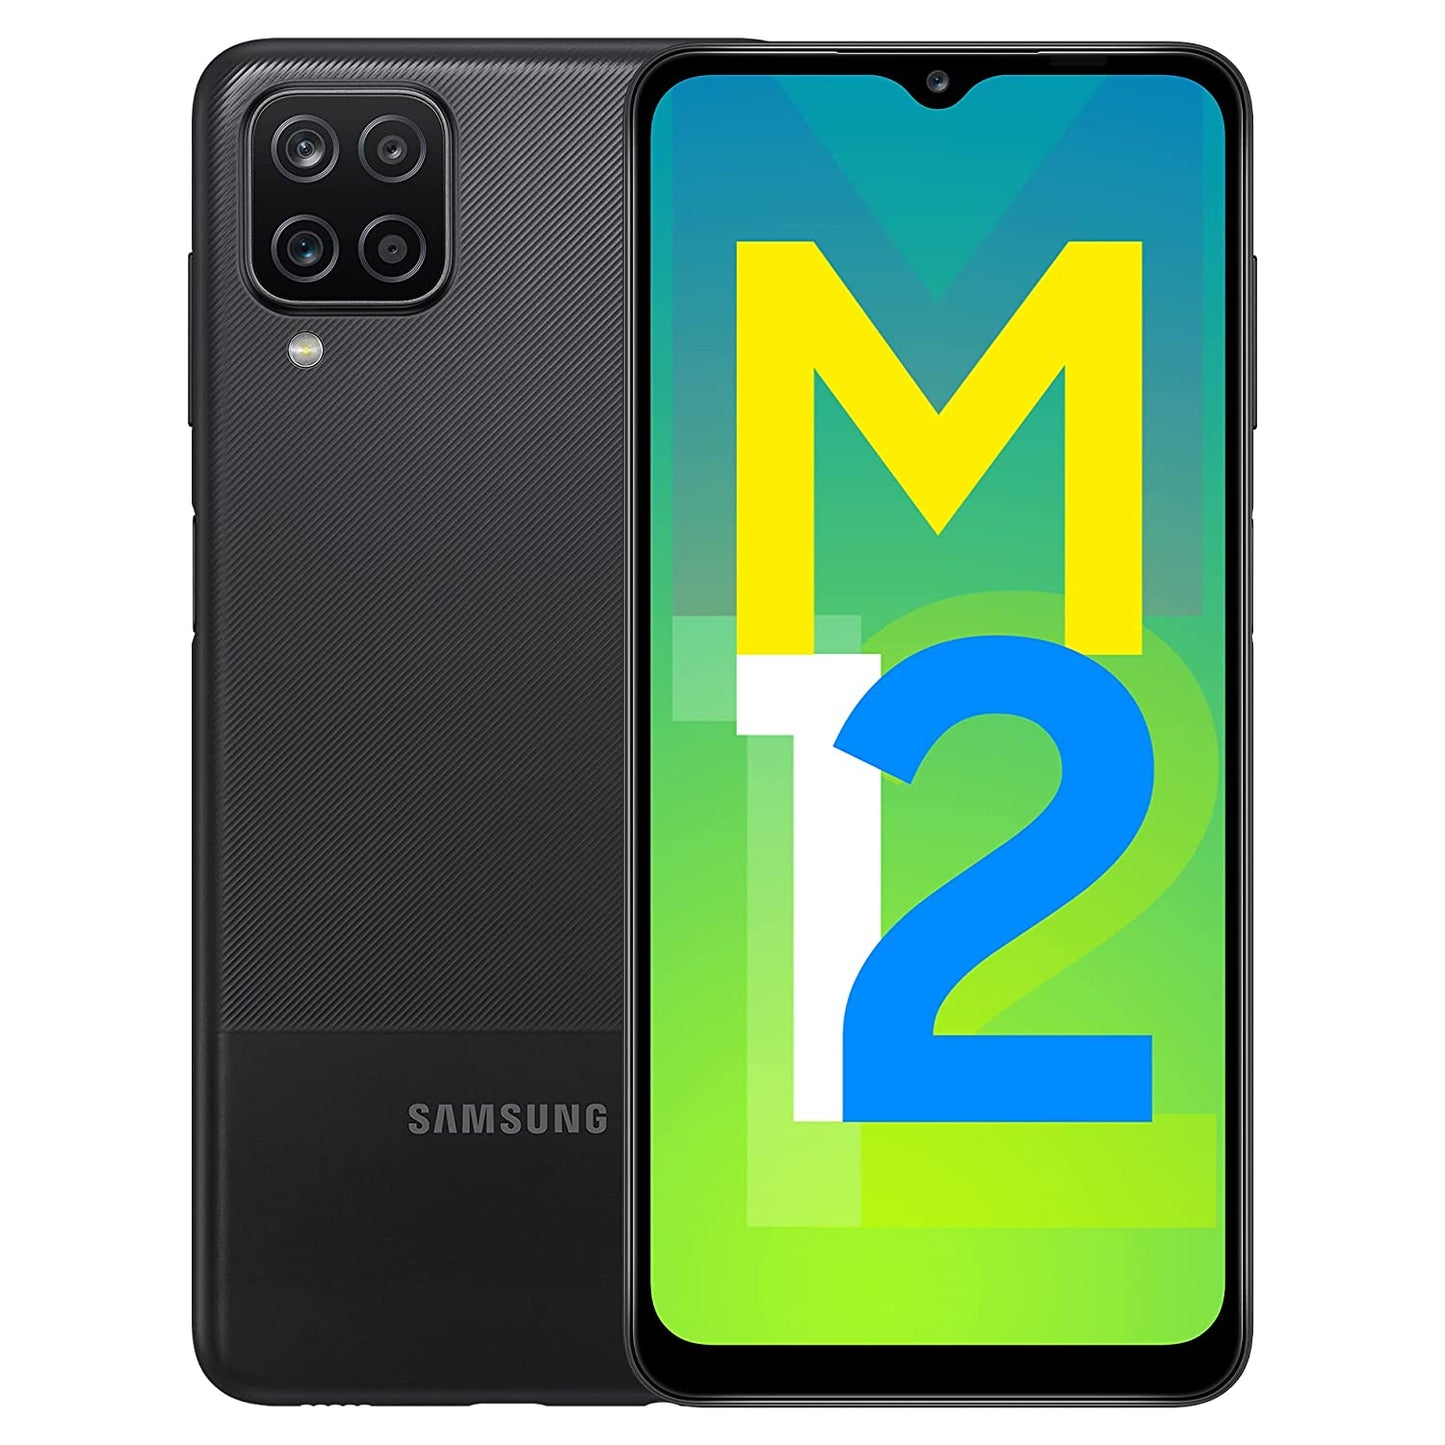 SAMSUNG Galaxy M12 (Black, 64 GB)  (4 GB RAM)